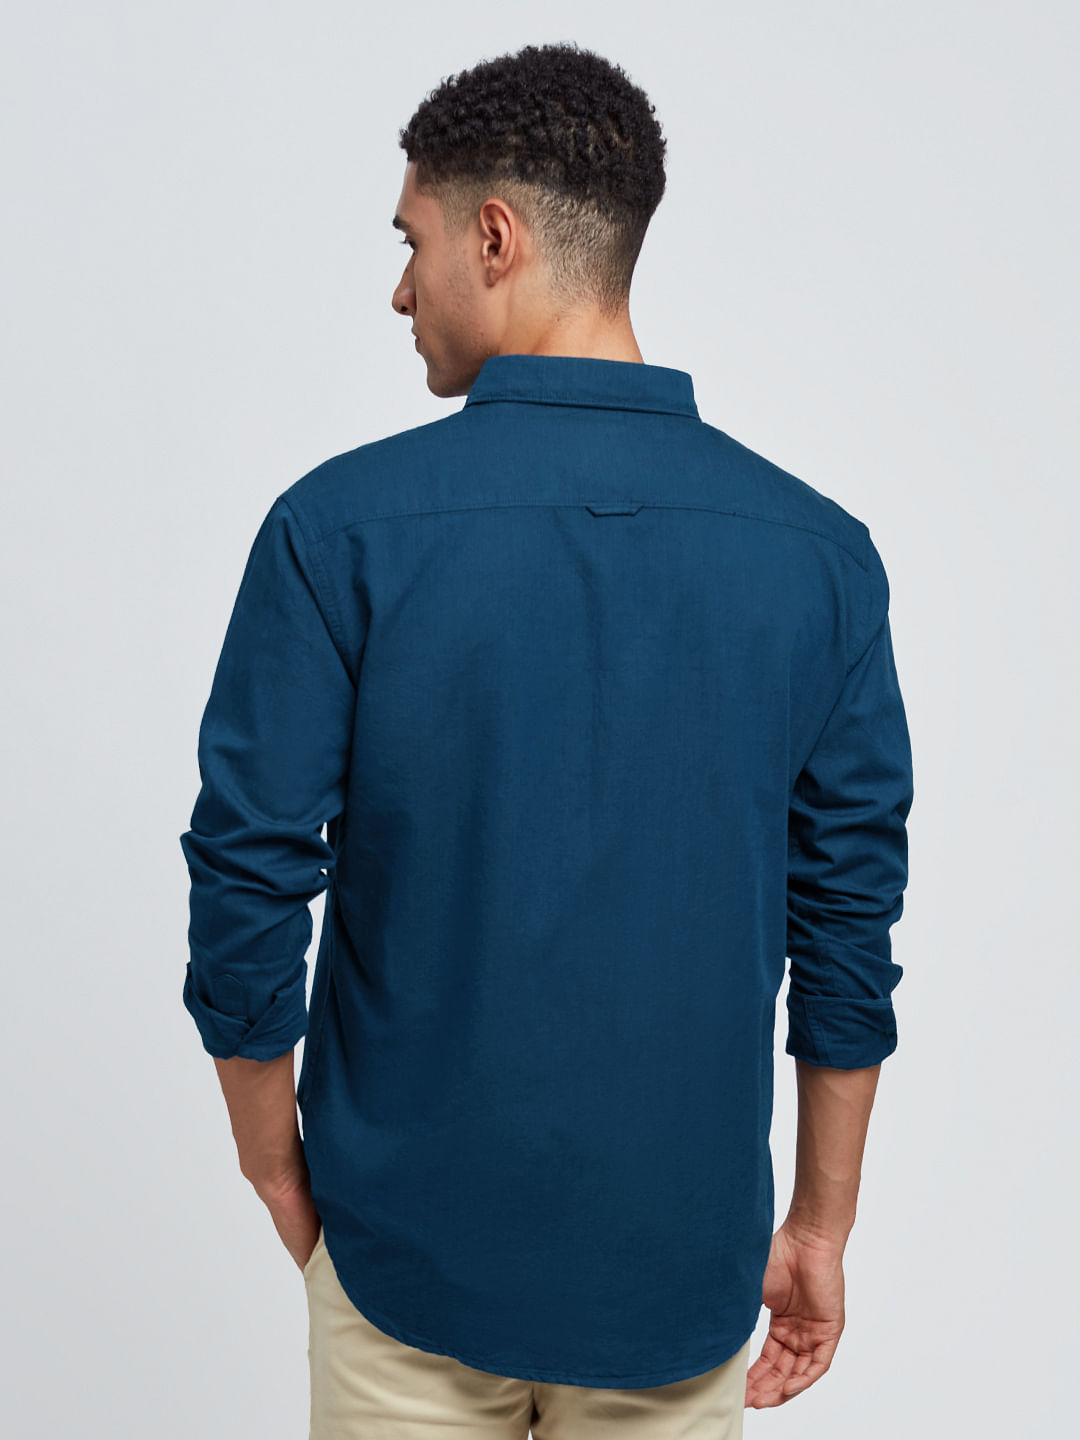 Buy Oxford Shirt Navy Blue Men's Shirt Online